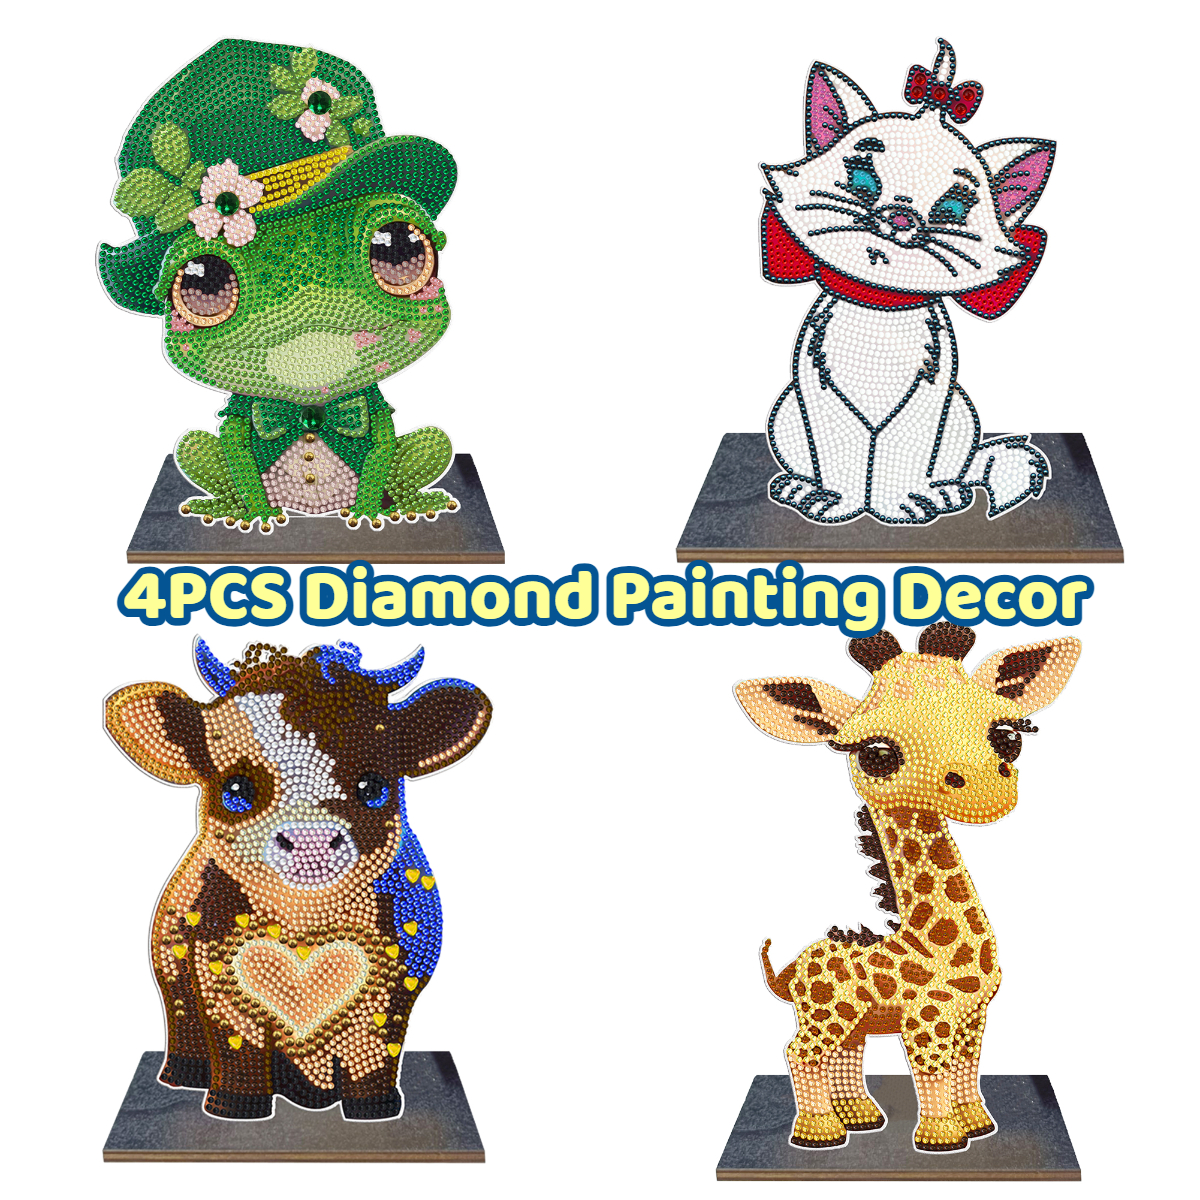 4pcs DIY Diamond Painting Keychains - Cup Animals